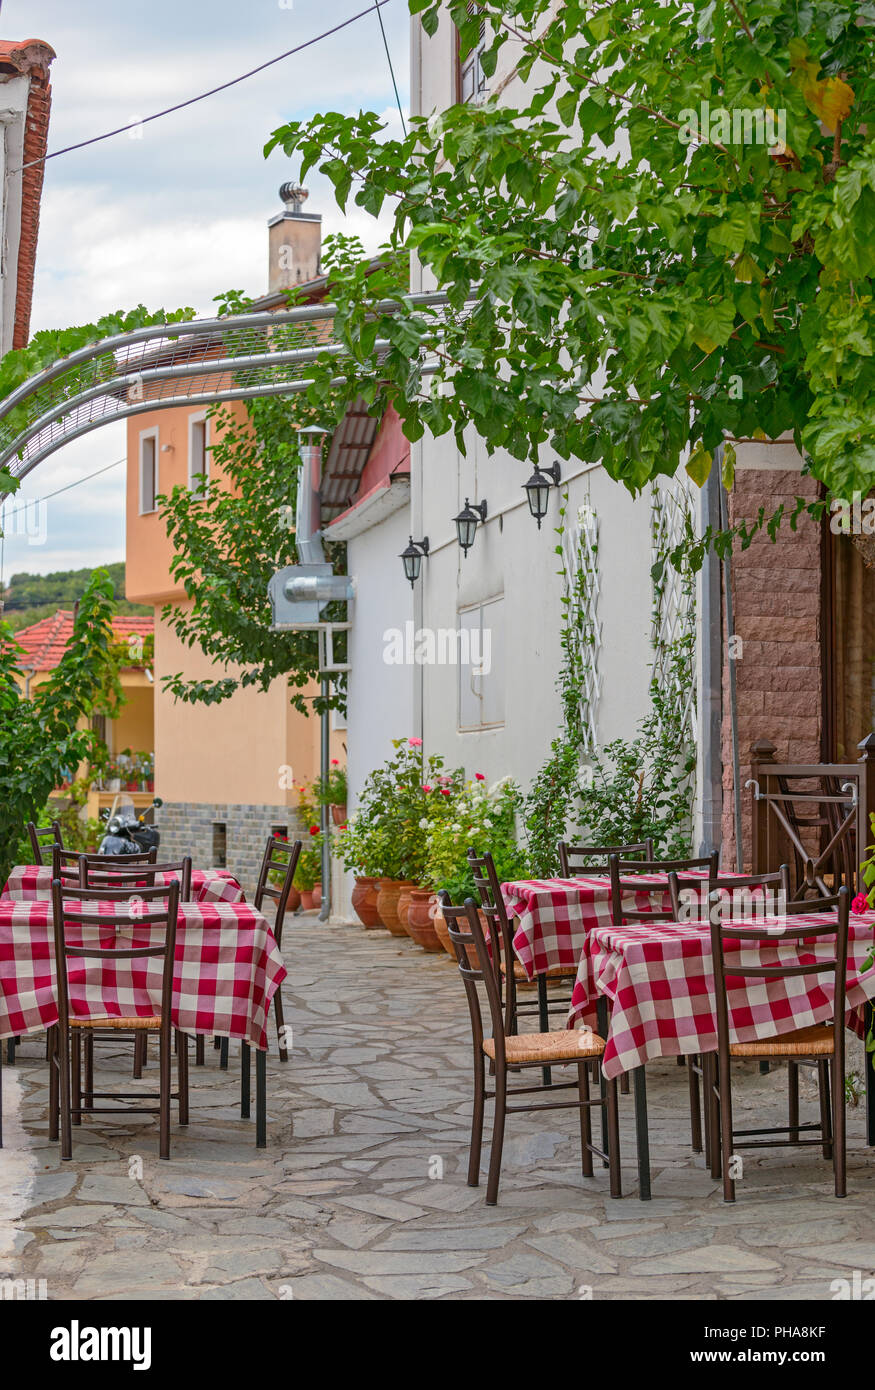 Restaurant tables on street terrace Stock Photo